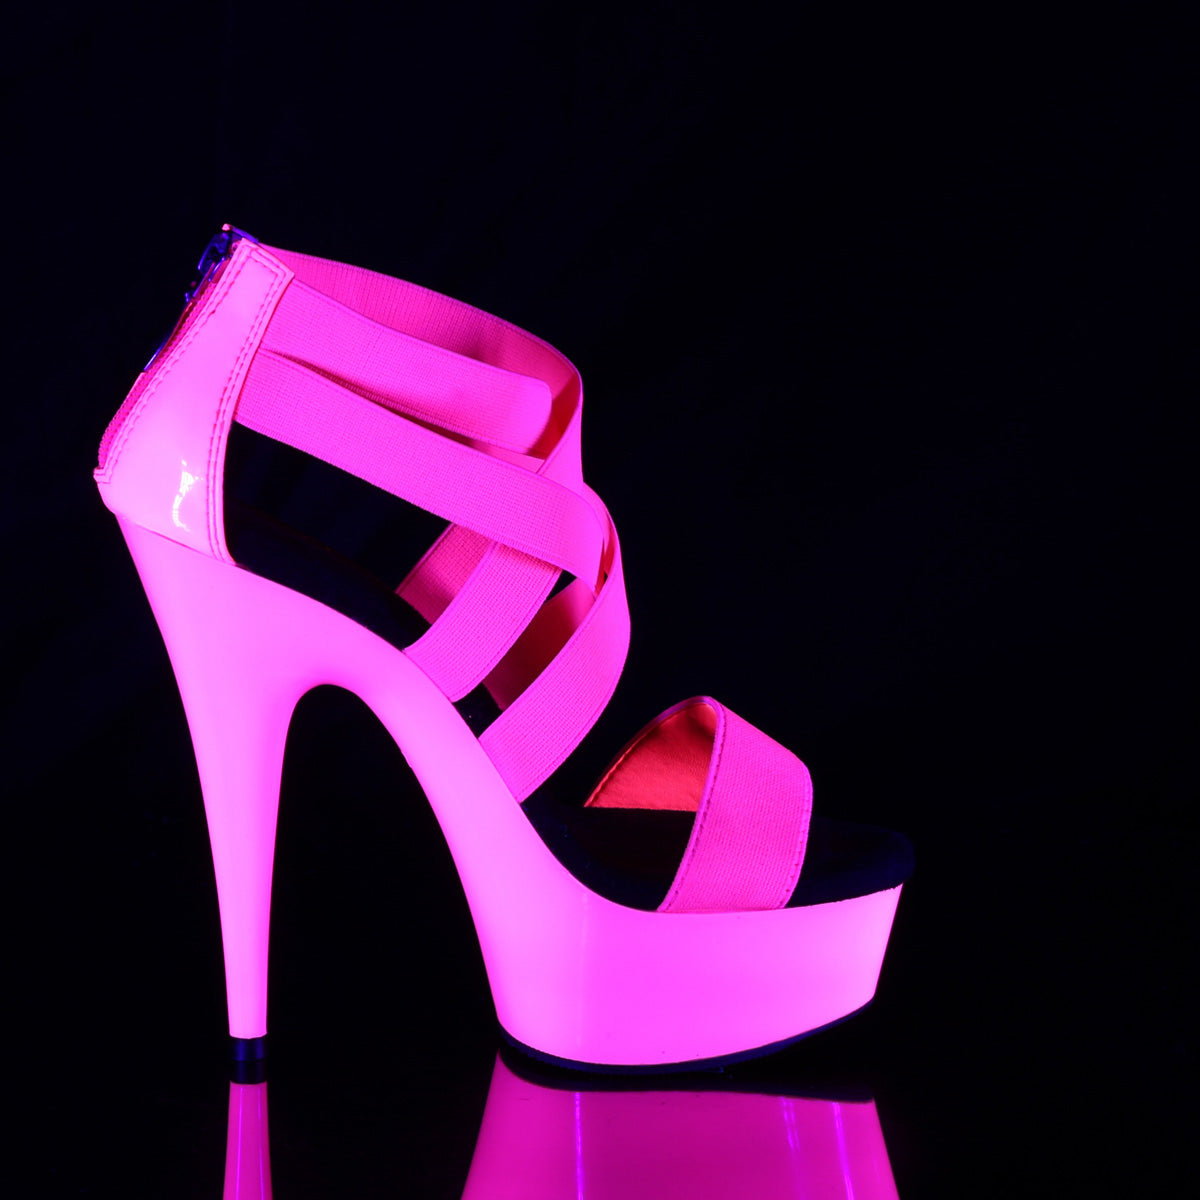 DELIGHT-669UV Pink Ankle Sandal High Heel